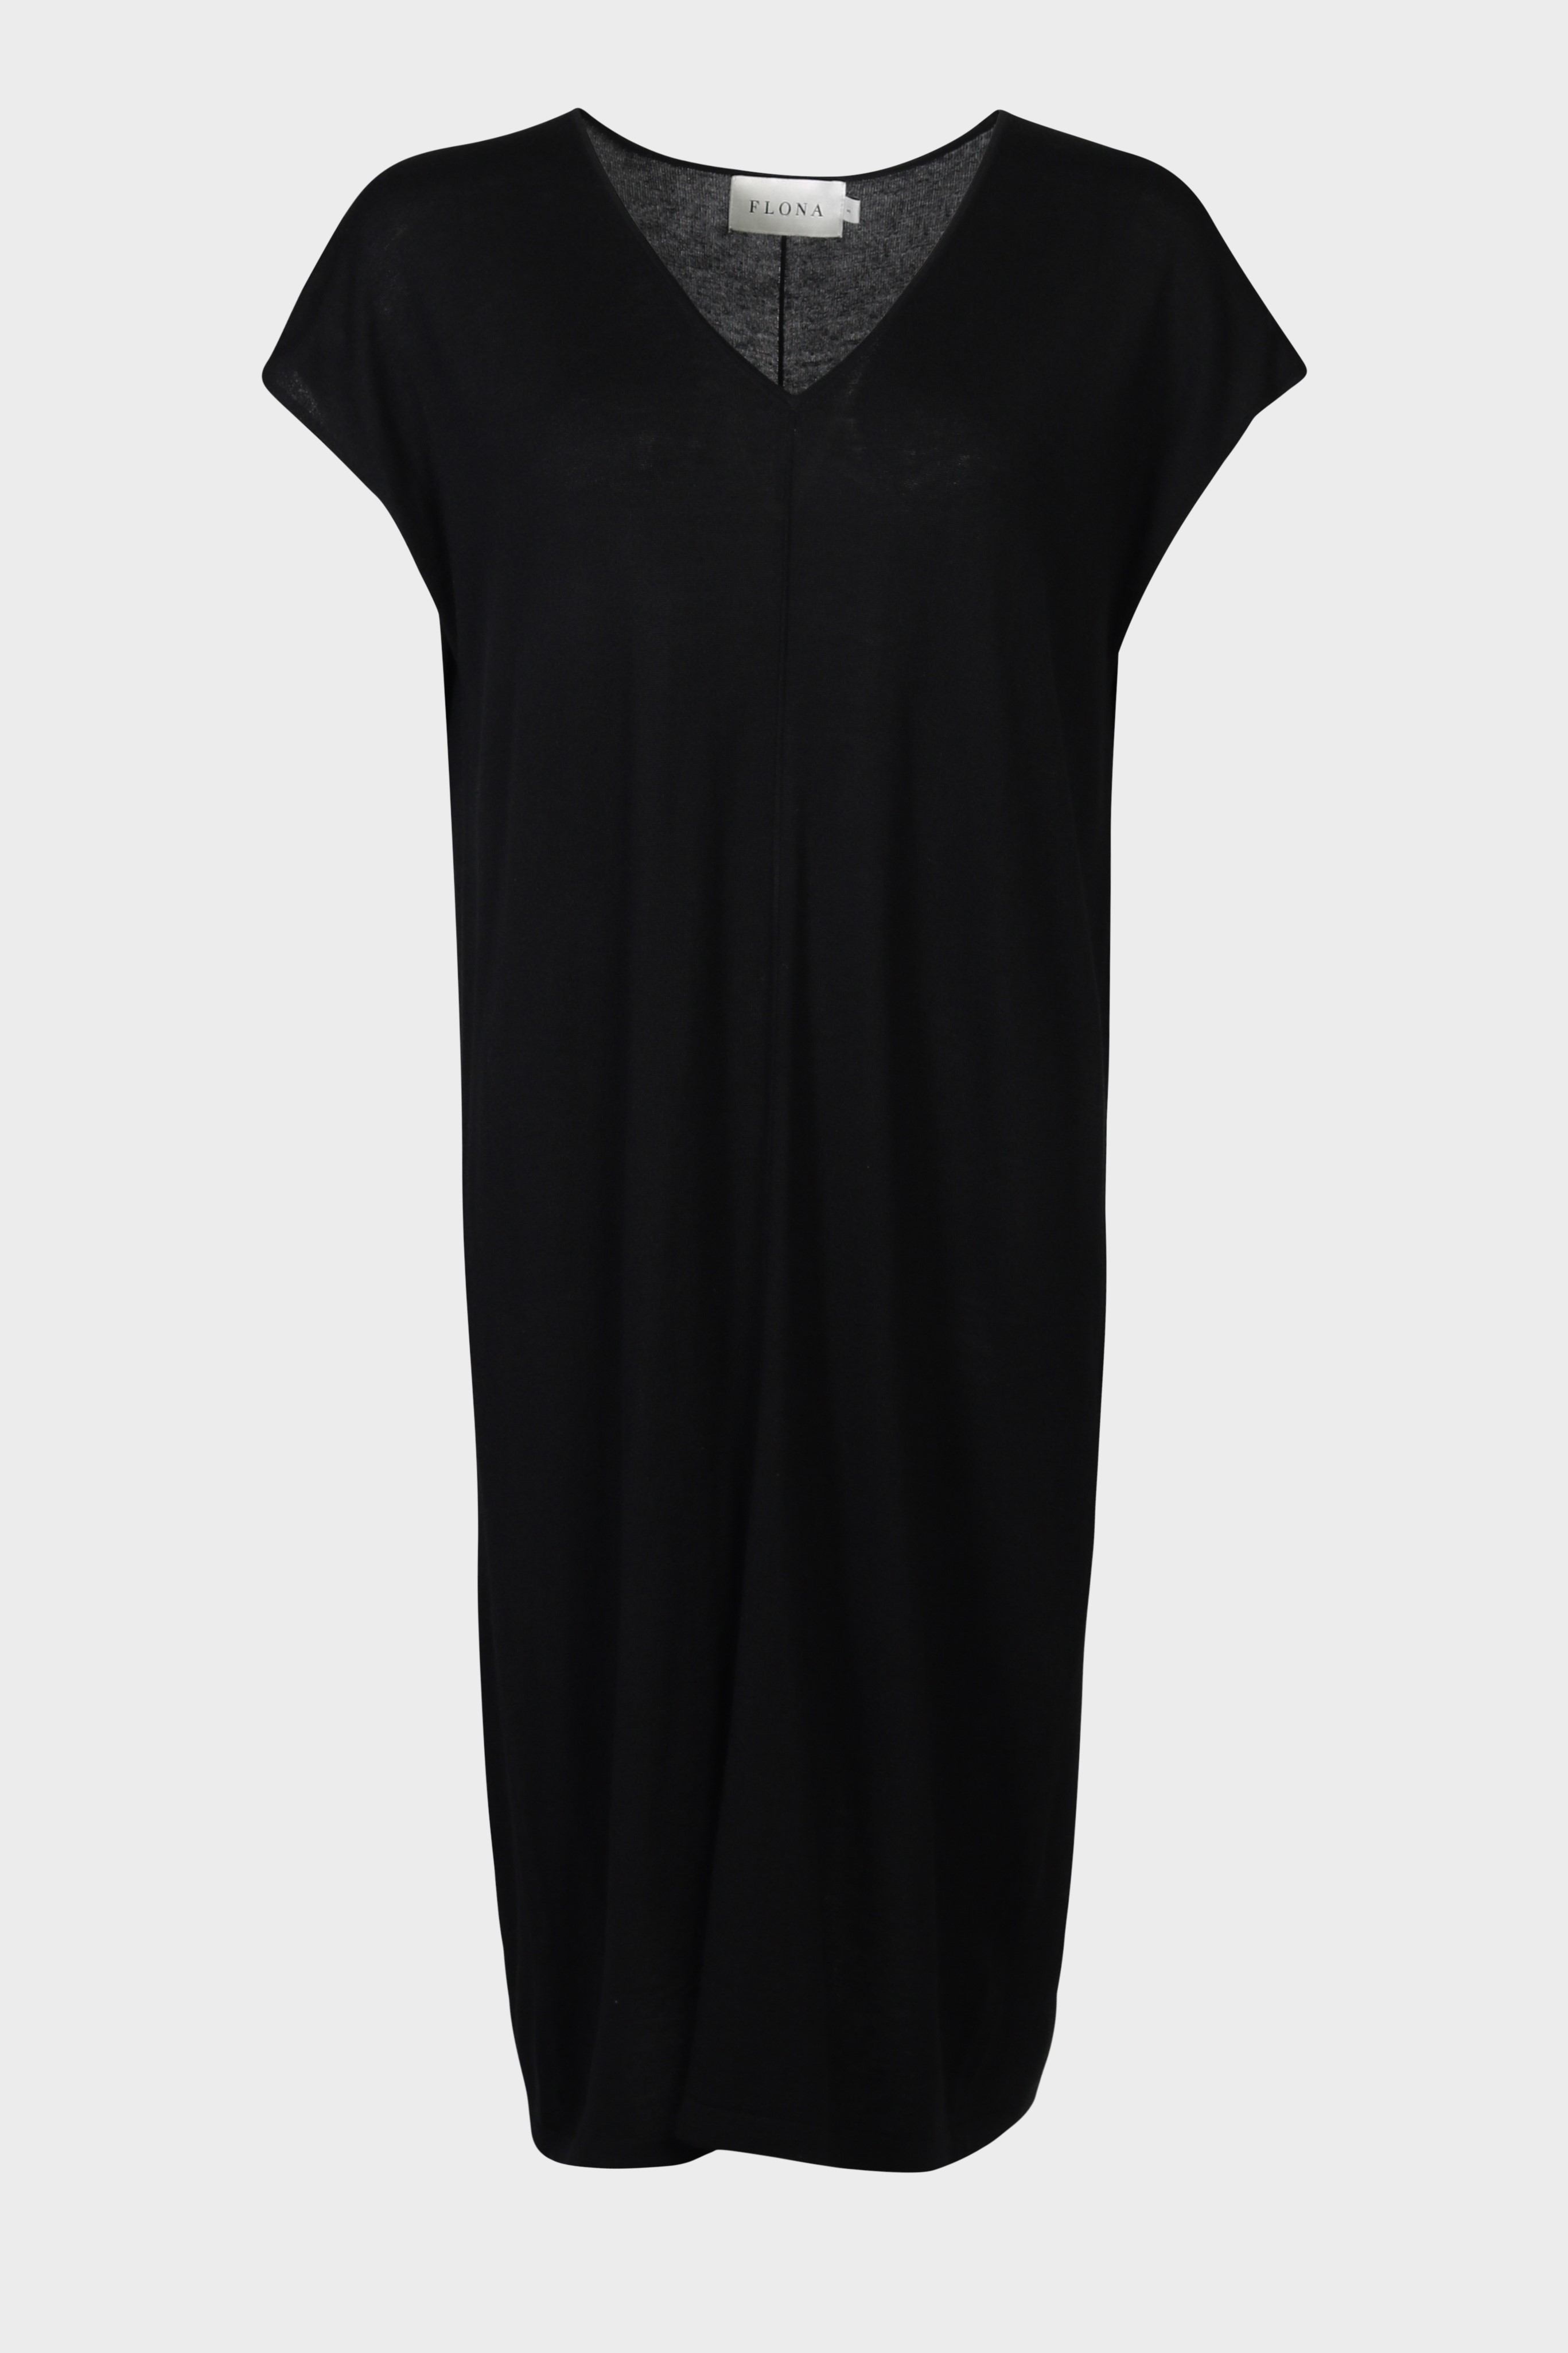 FLONA Cashmere/Silk Knit Dress in Black S